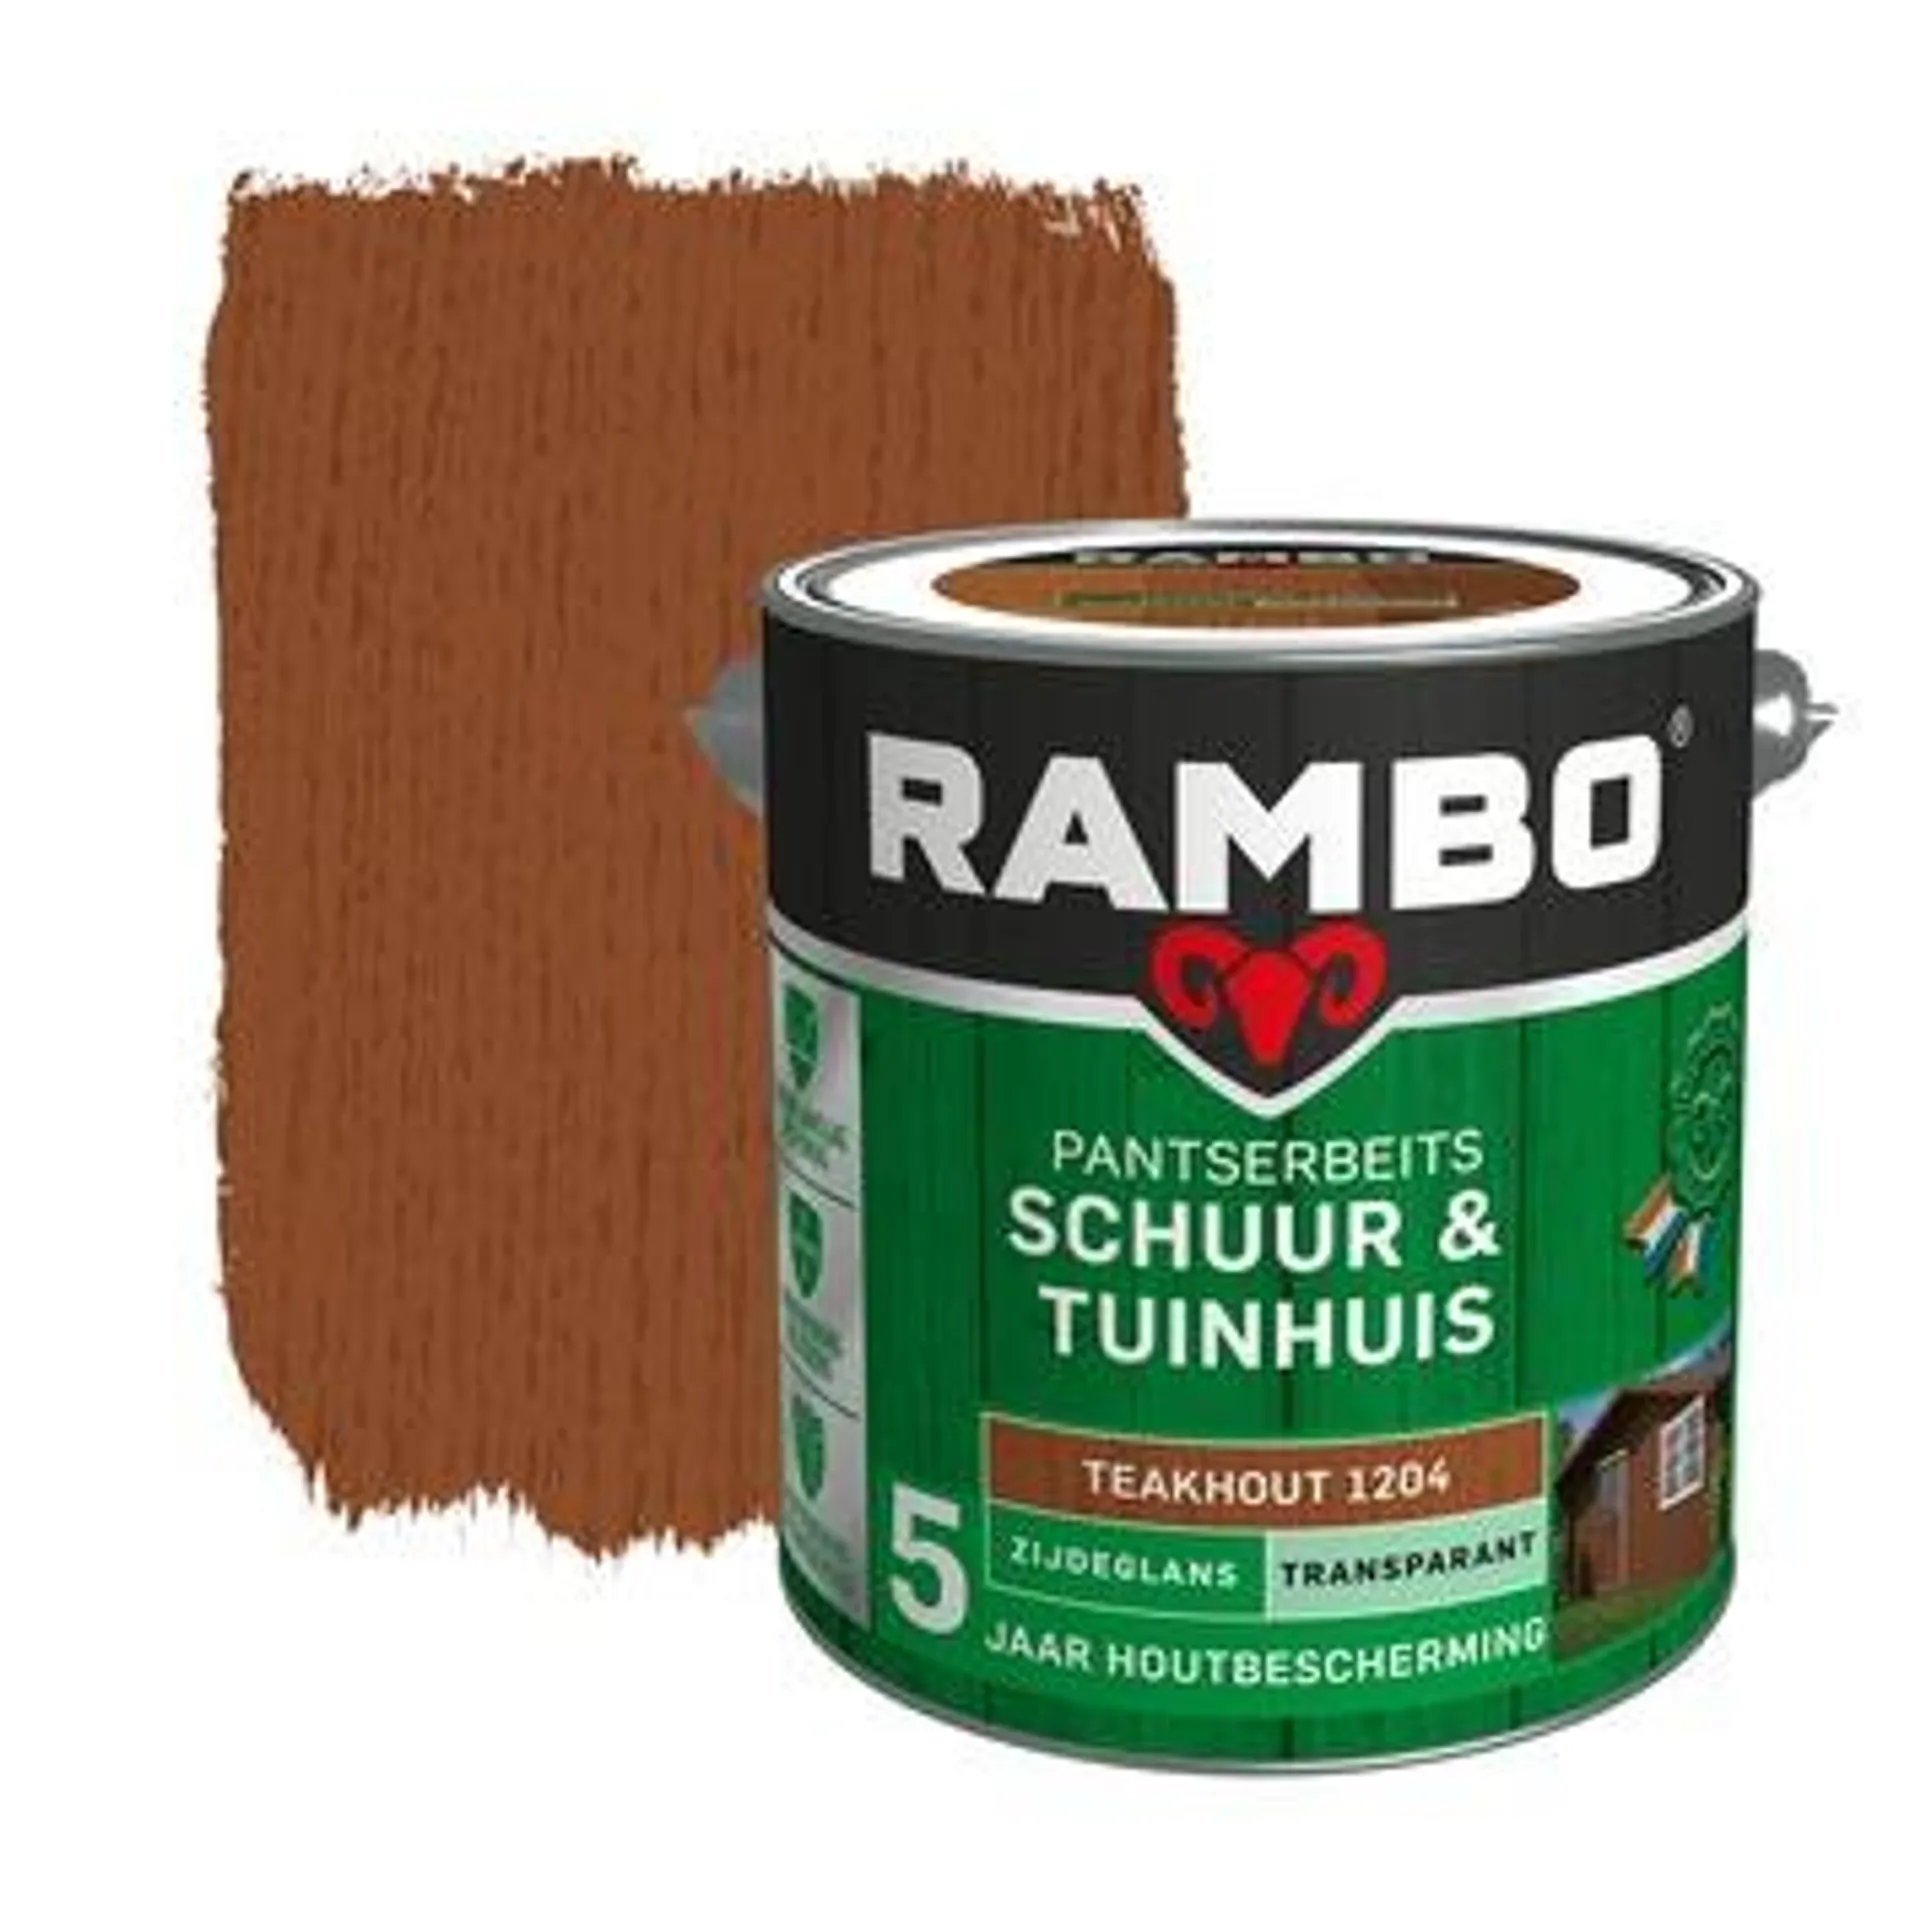 Rambo pantserbeits schuur & tuinhuis transparant teakhout zijdeglans 2,5 liter